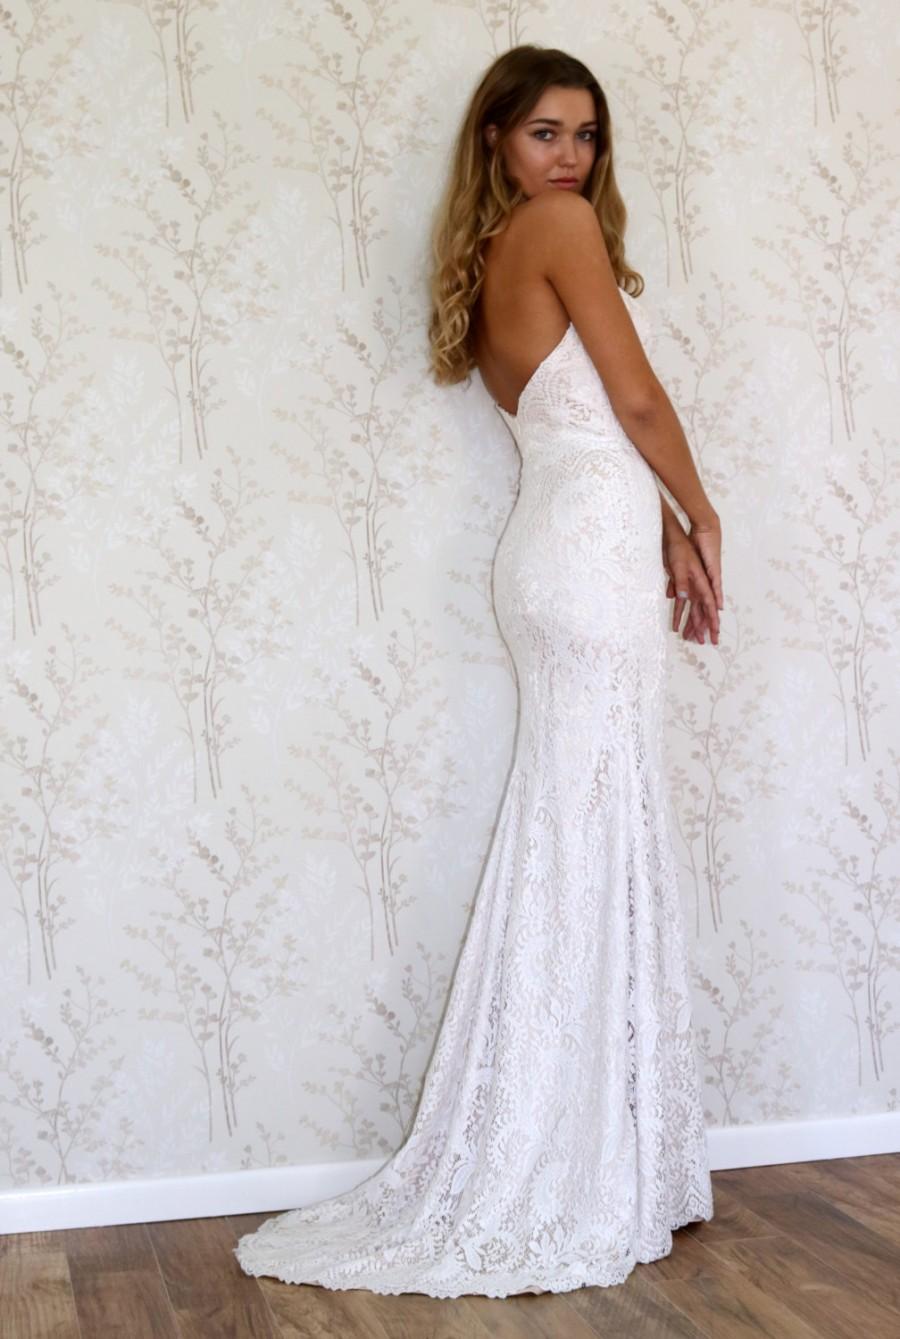 زفاف - Lace Wedding dress/Simple bohemian style wedding gown/Strapless sweetheart neckline wedding dress.